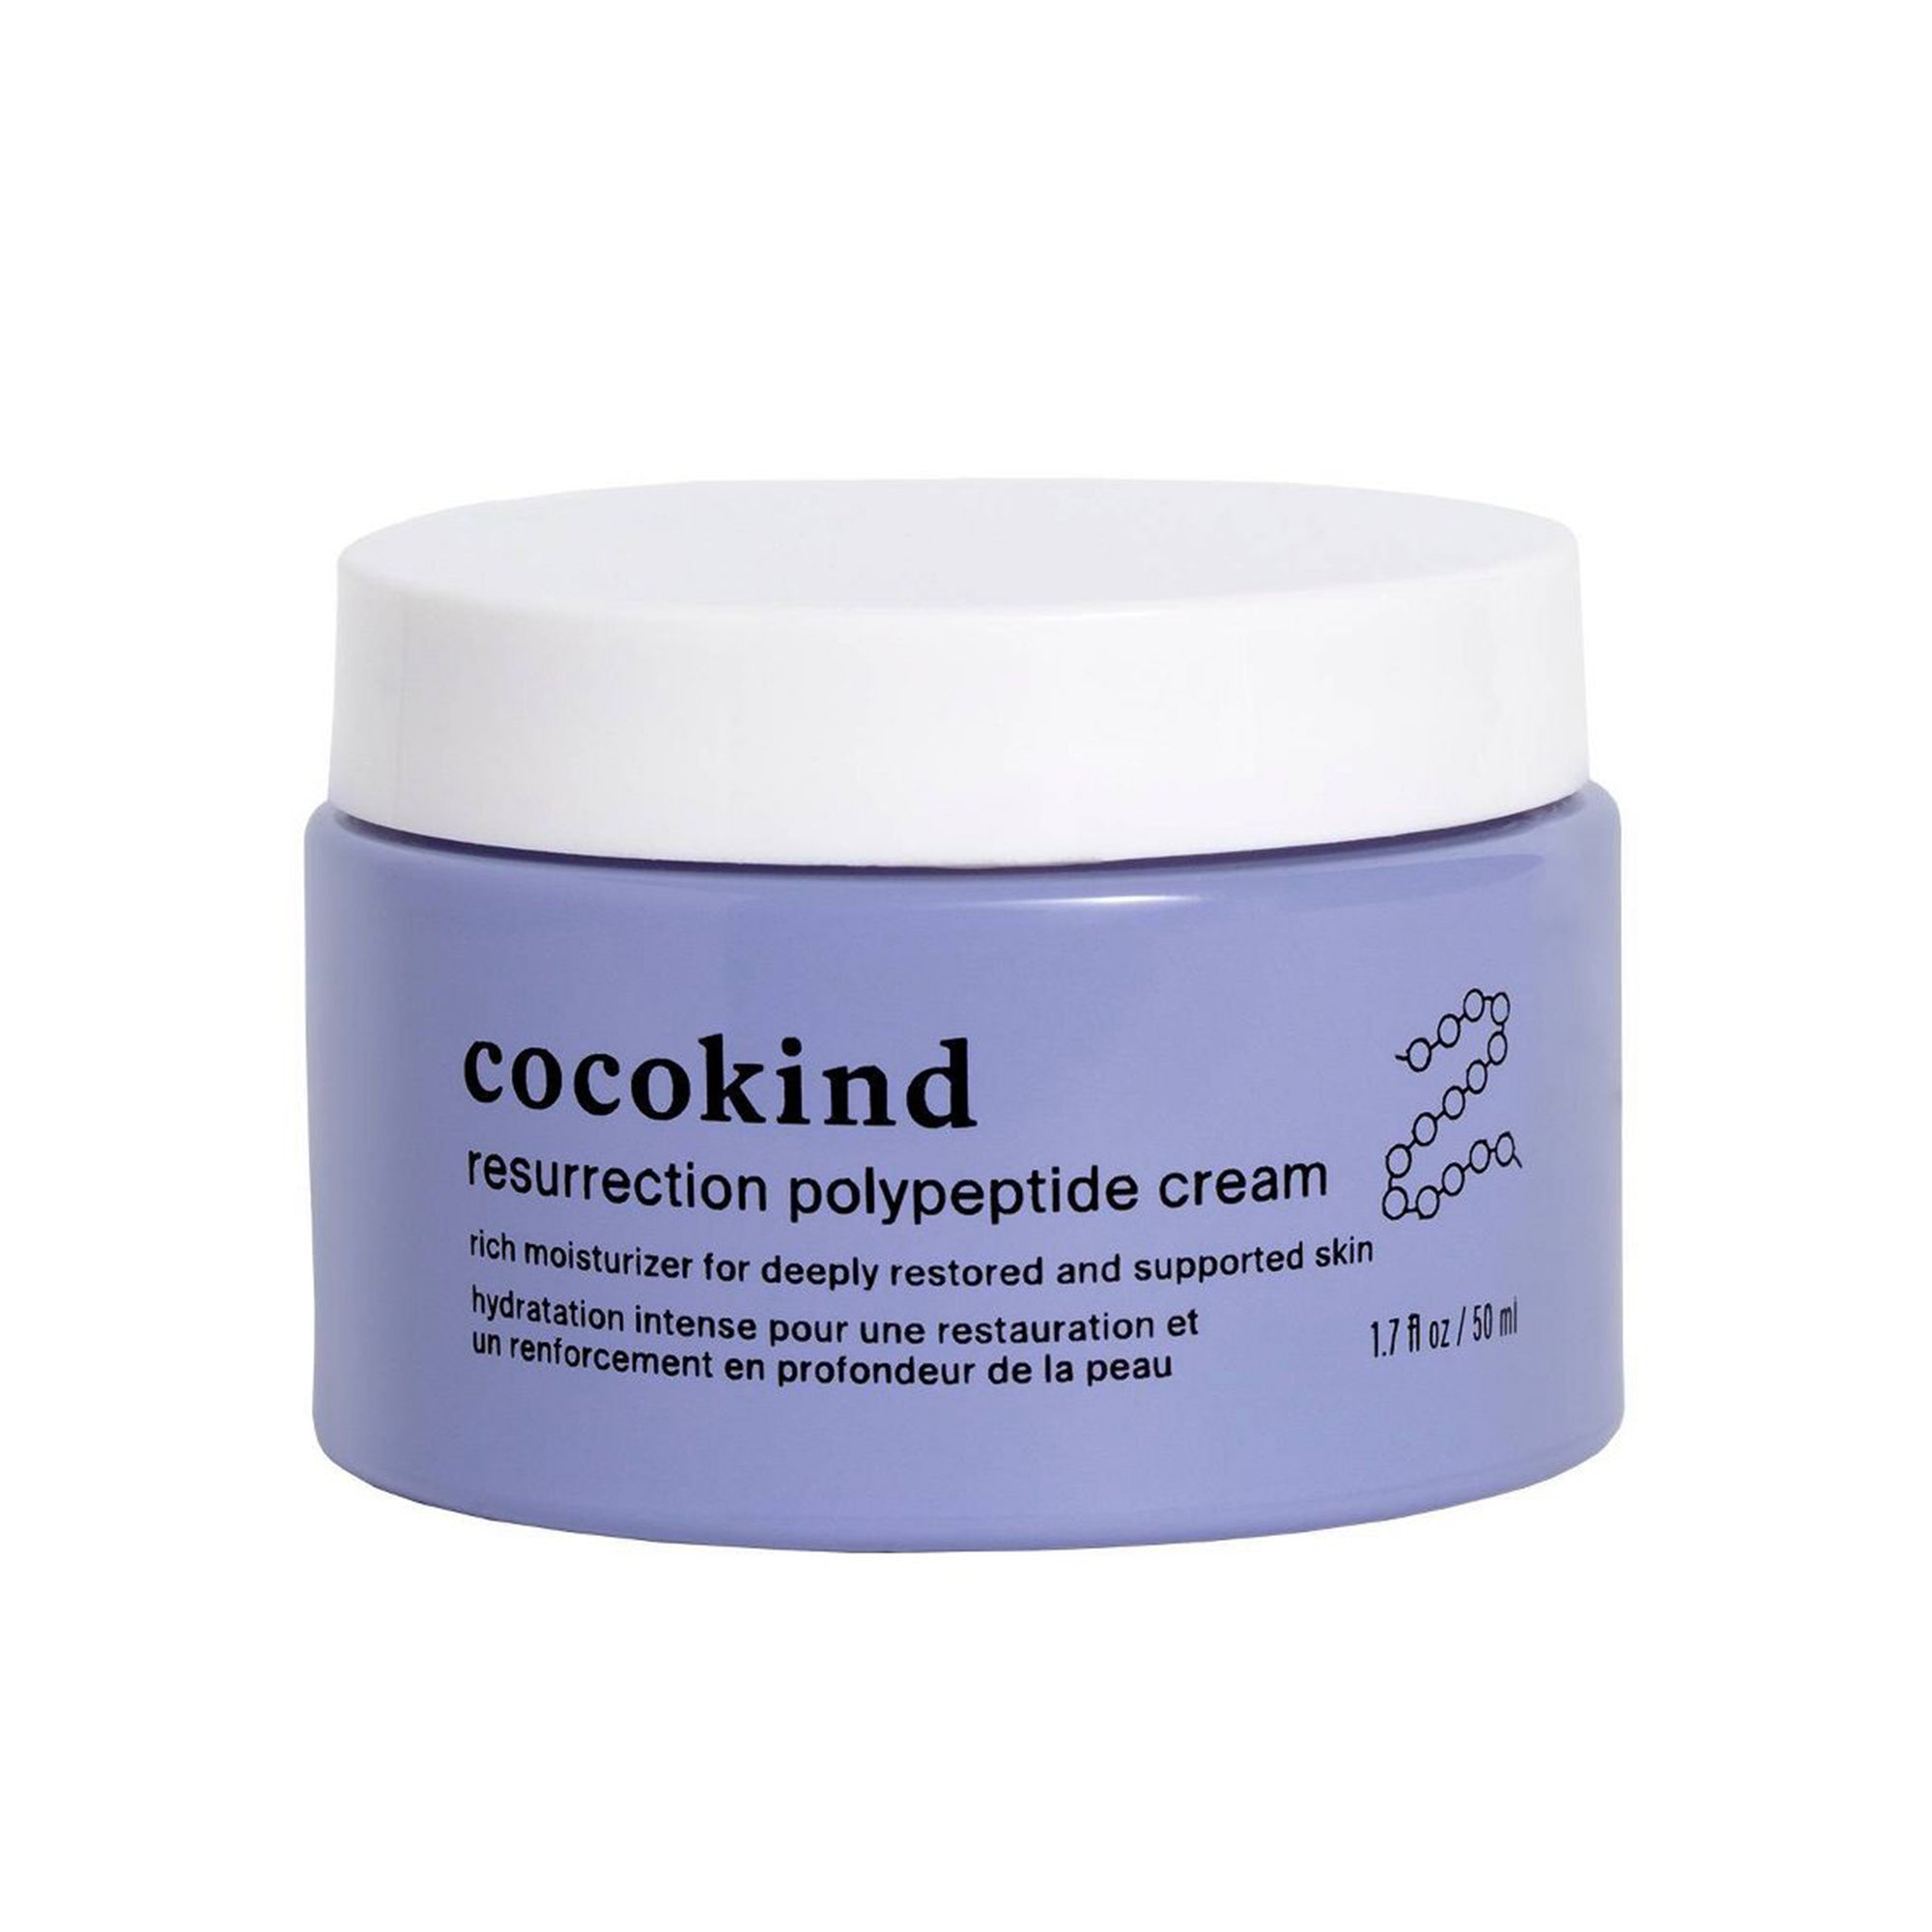 Cocokind Resurrection Polypeptide Cream, 1.7oz